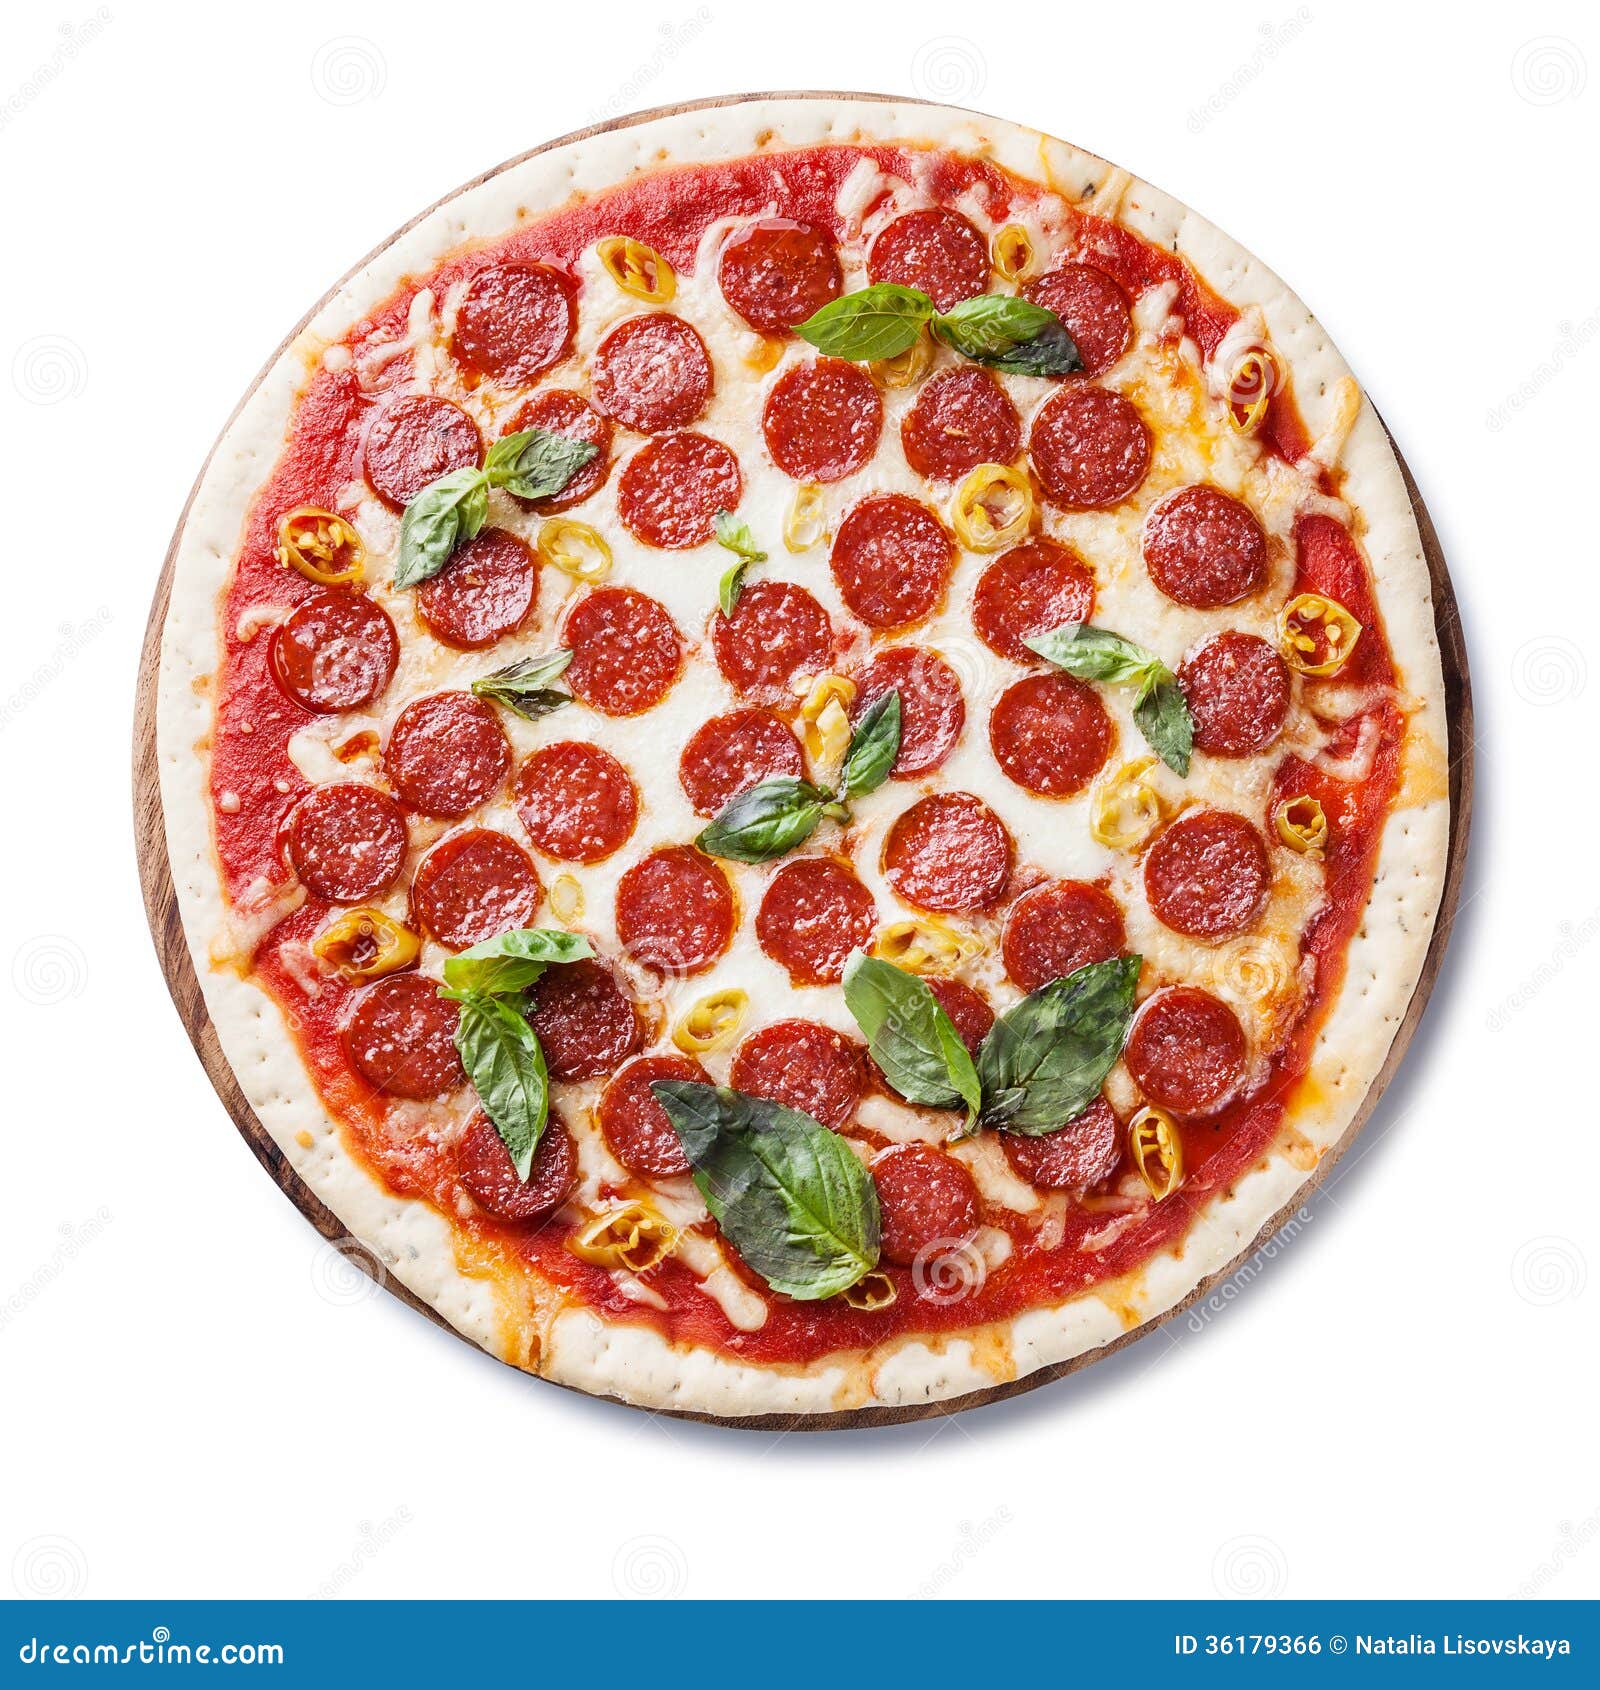 фото пицца на белом фоне пепперони фото 27